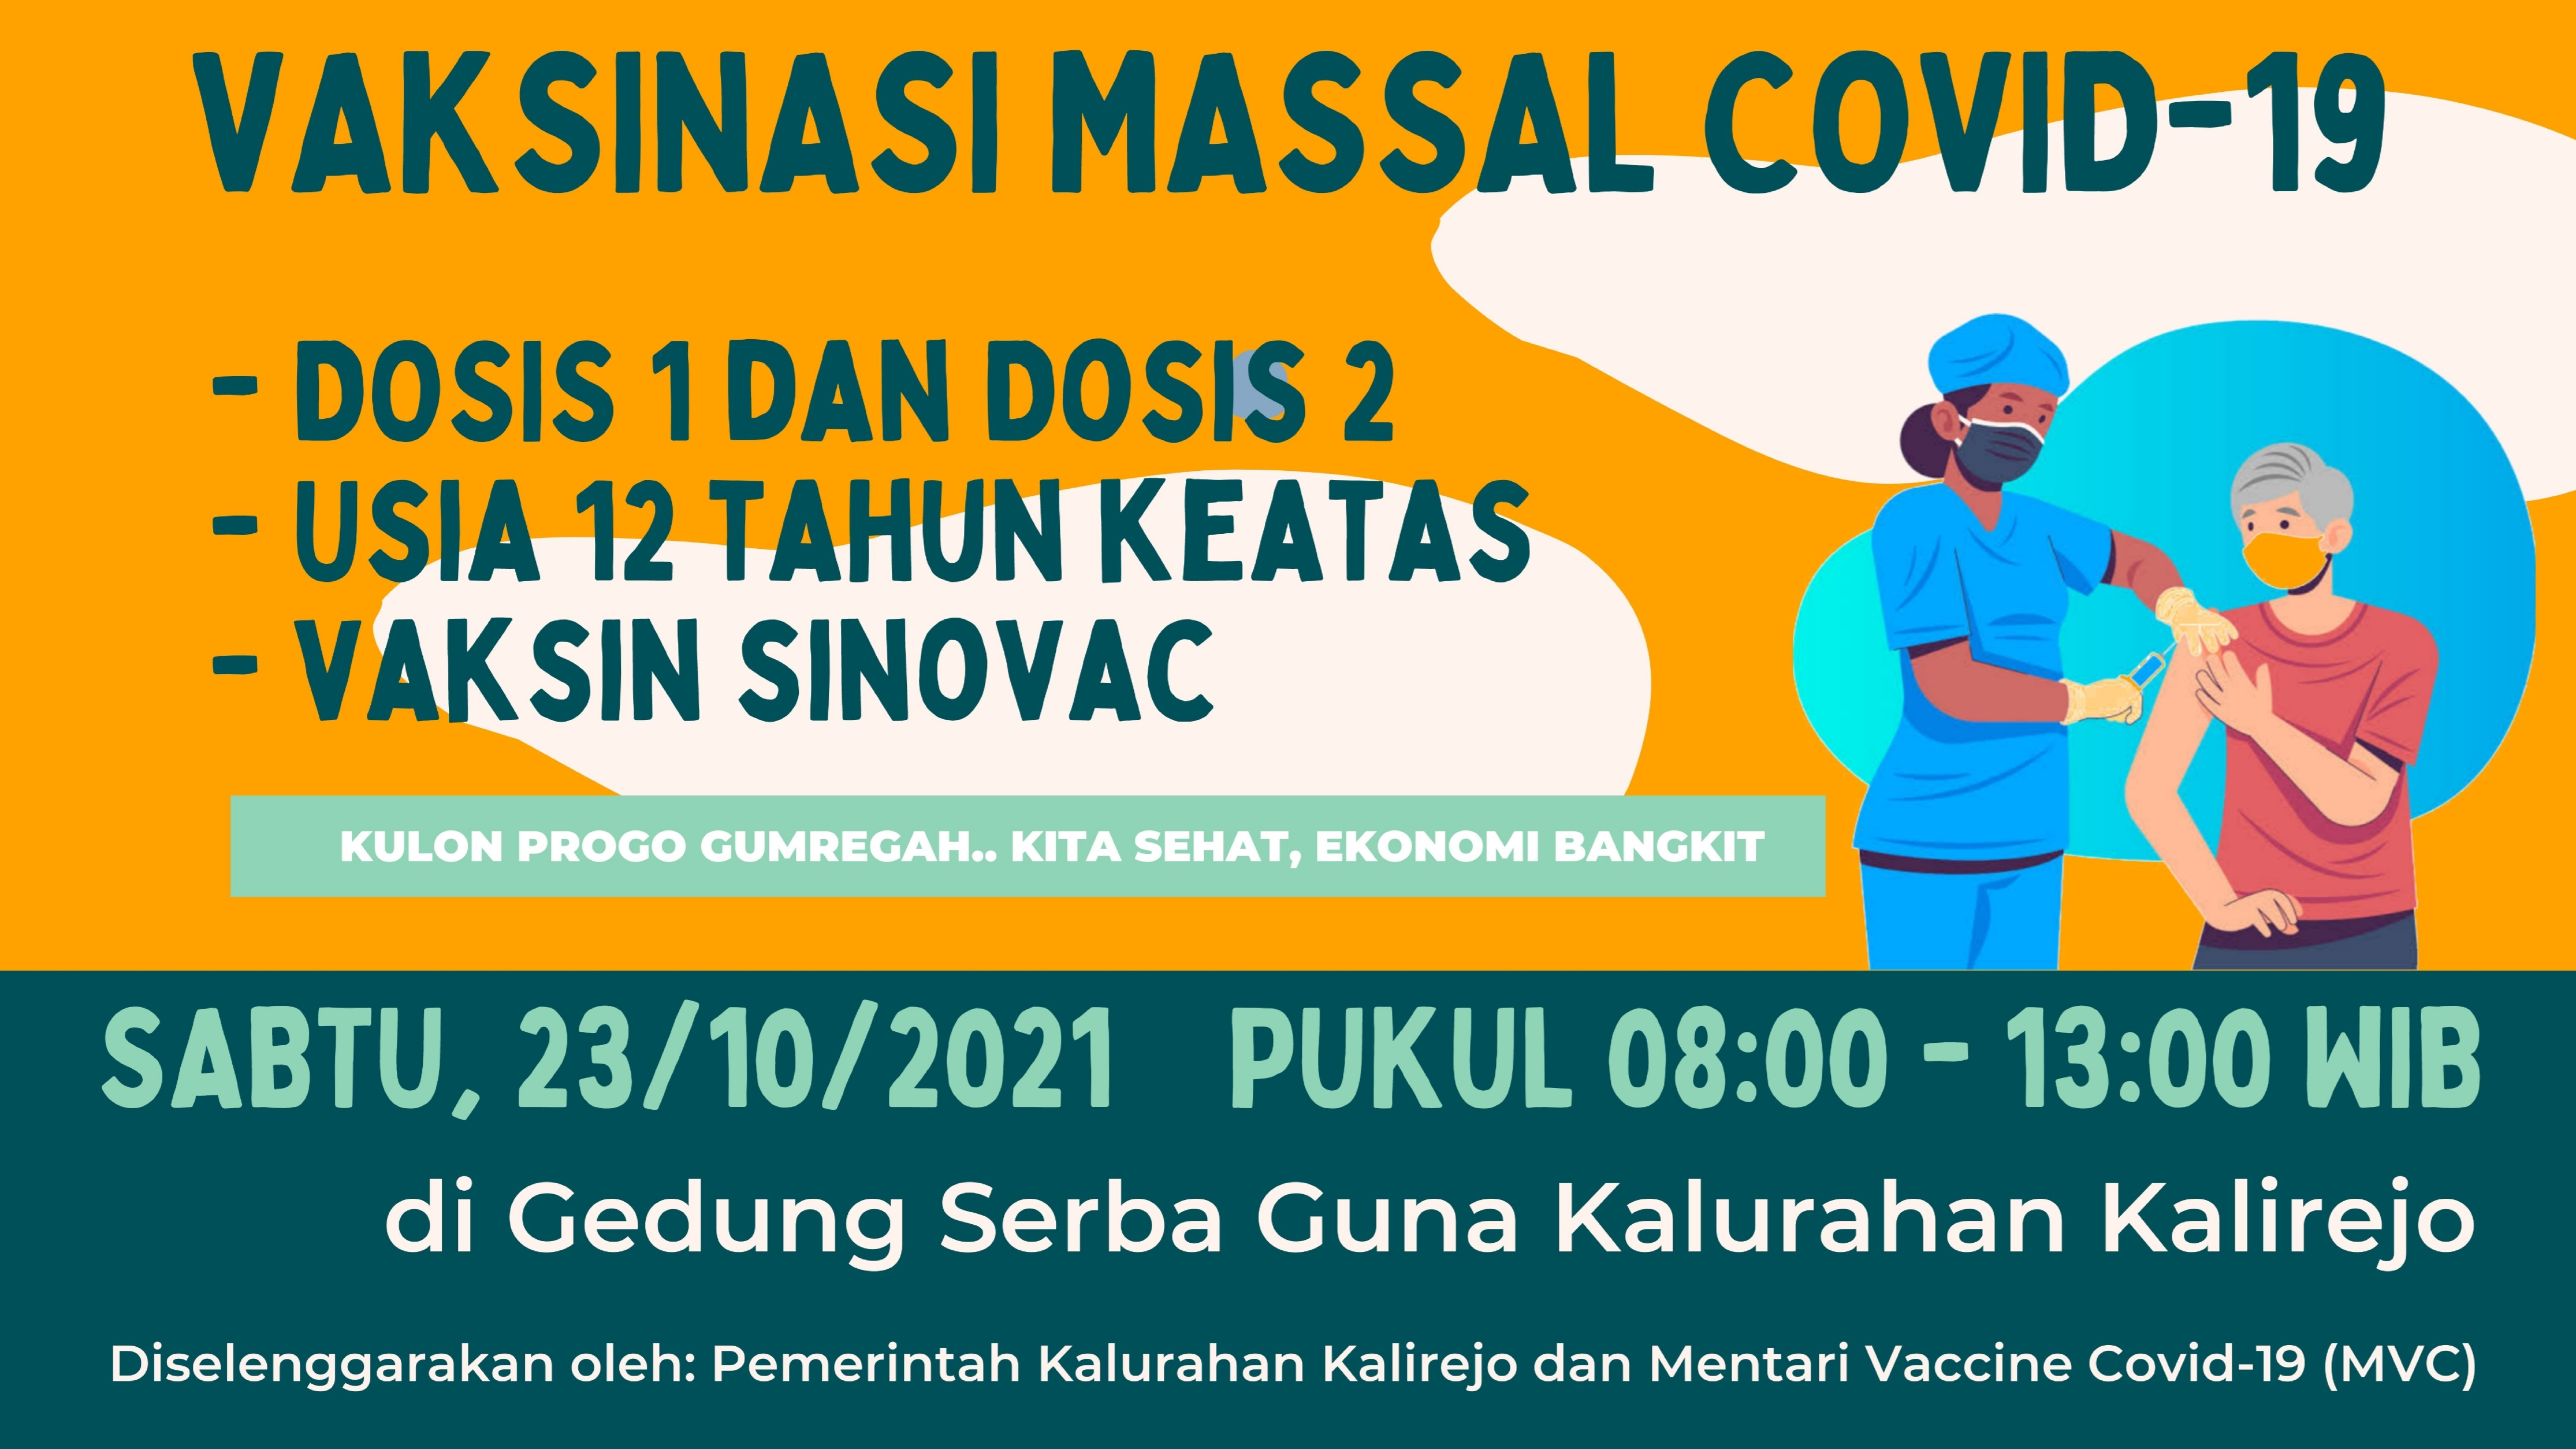 Vaksinasi Massal Covid-19, 23 Oktober 2021 Jenis Vaksin Sinovac